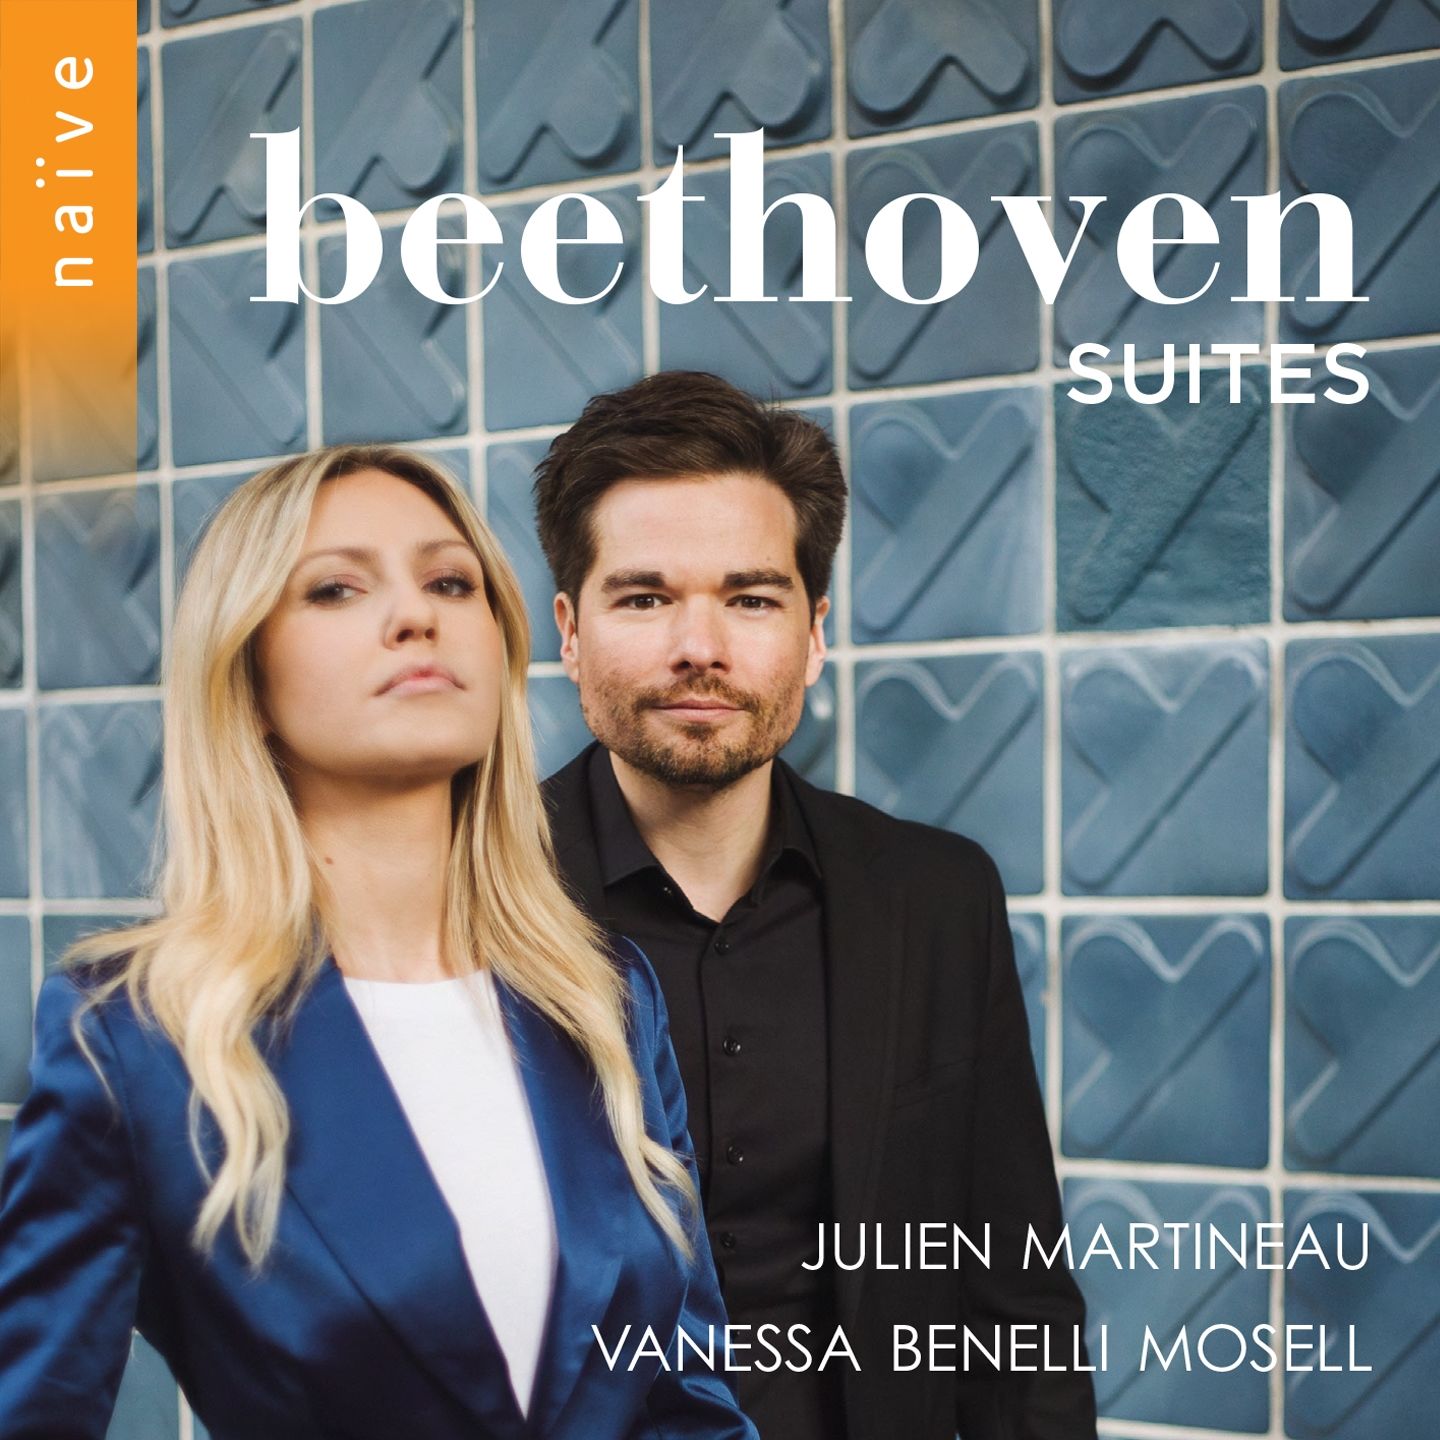 Julien Martineau, Vanessa Beneli Mosell, Yann Dubost, Jose Fillatreau - Beethoven Suites (2020) [FLAC 24bit/48kHz]